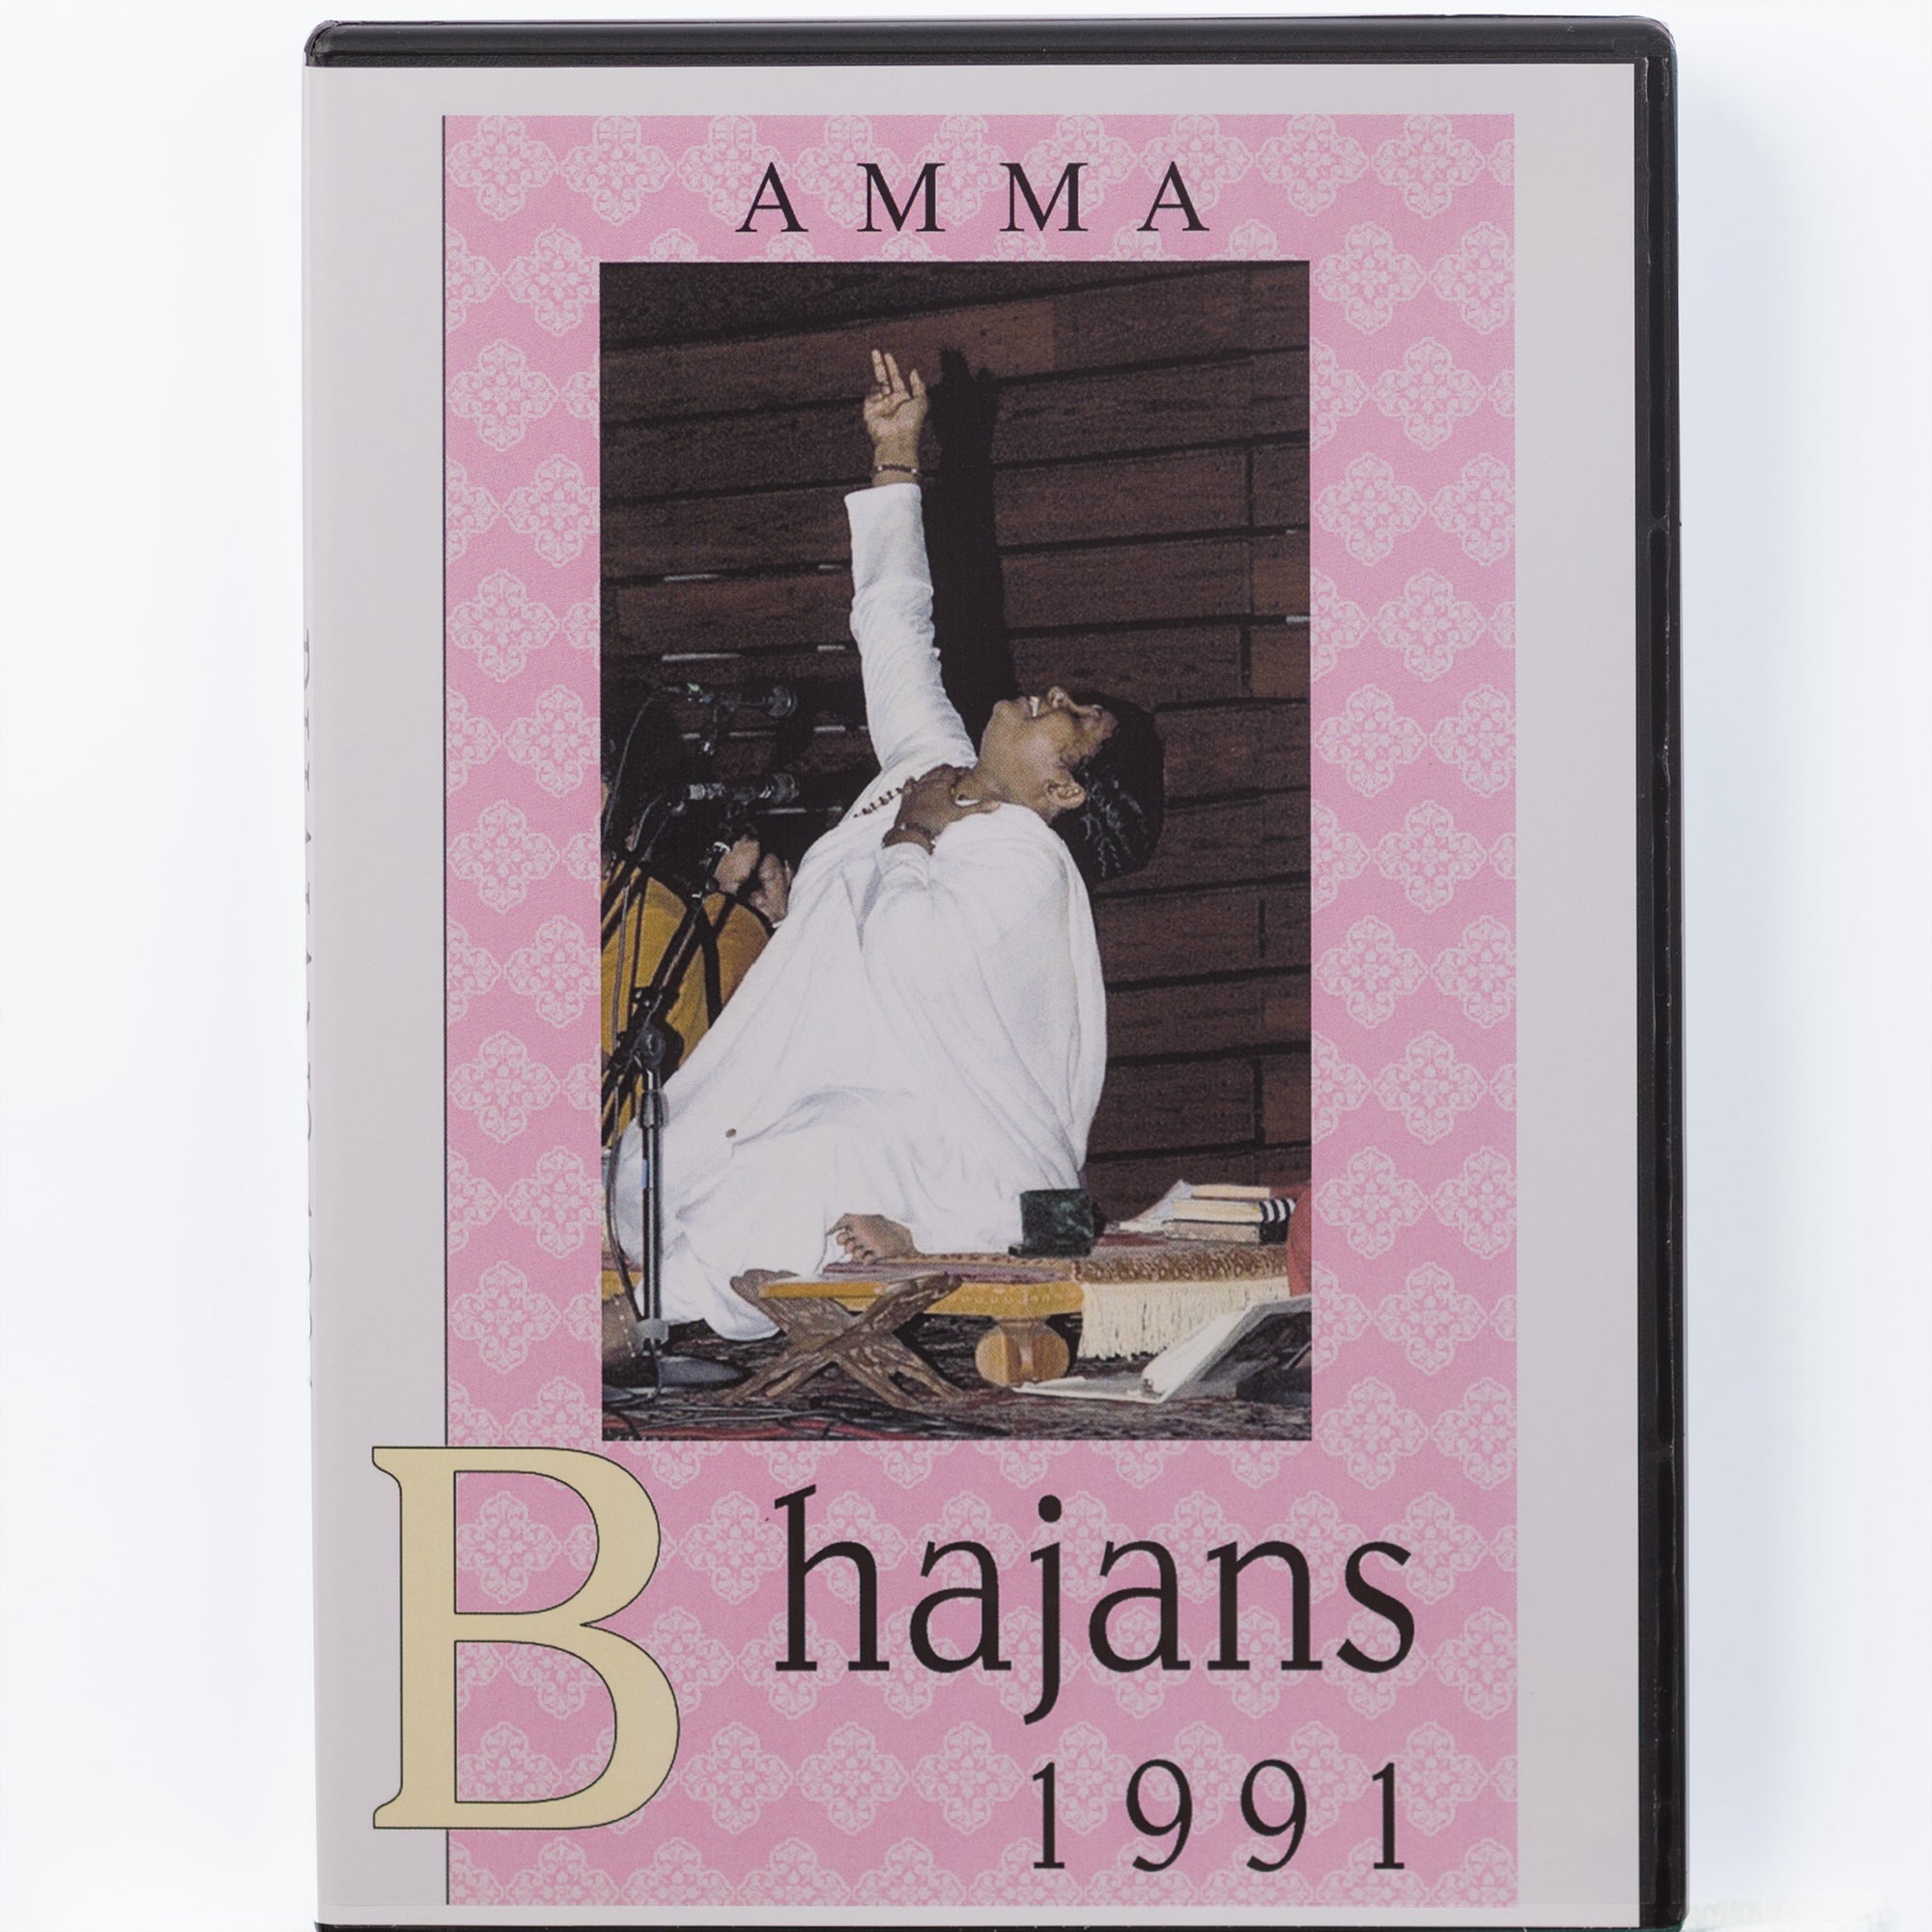 Bhajans 1991